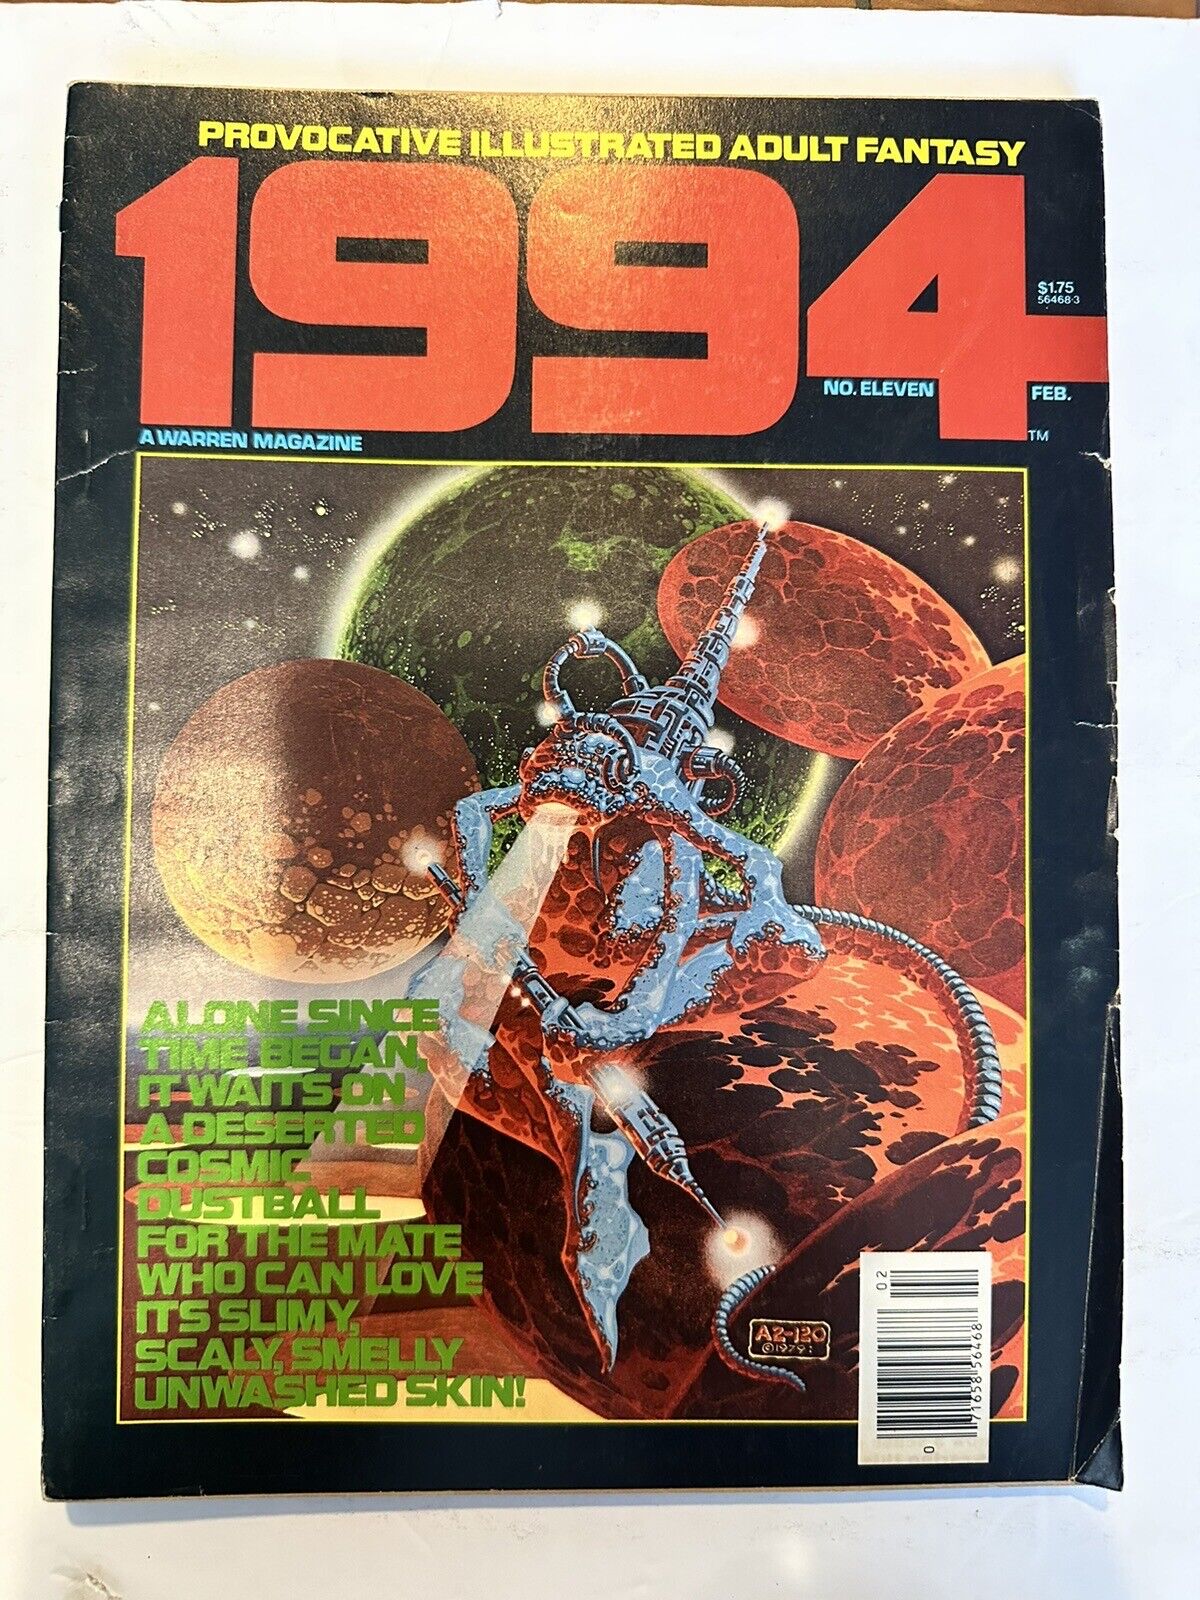 1984 Magazine #11 September 1978 Warren Publishing, Bagged & Boarded